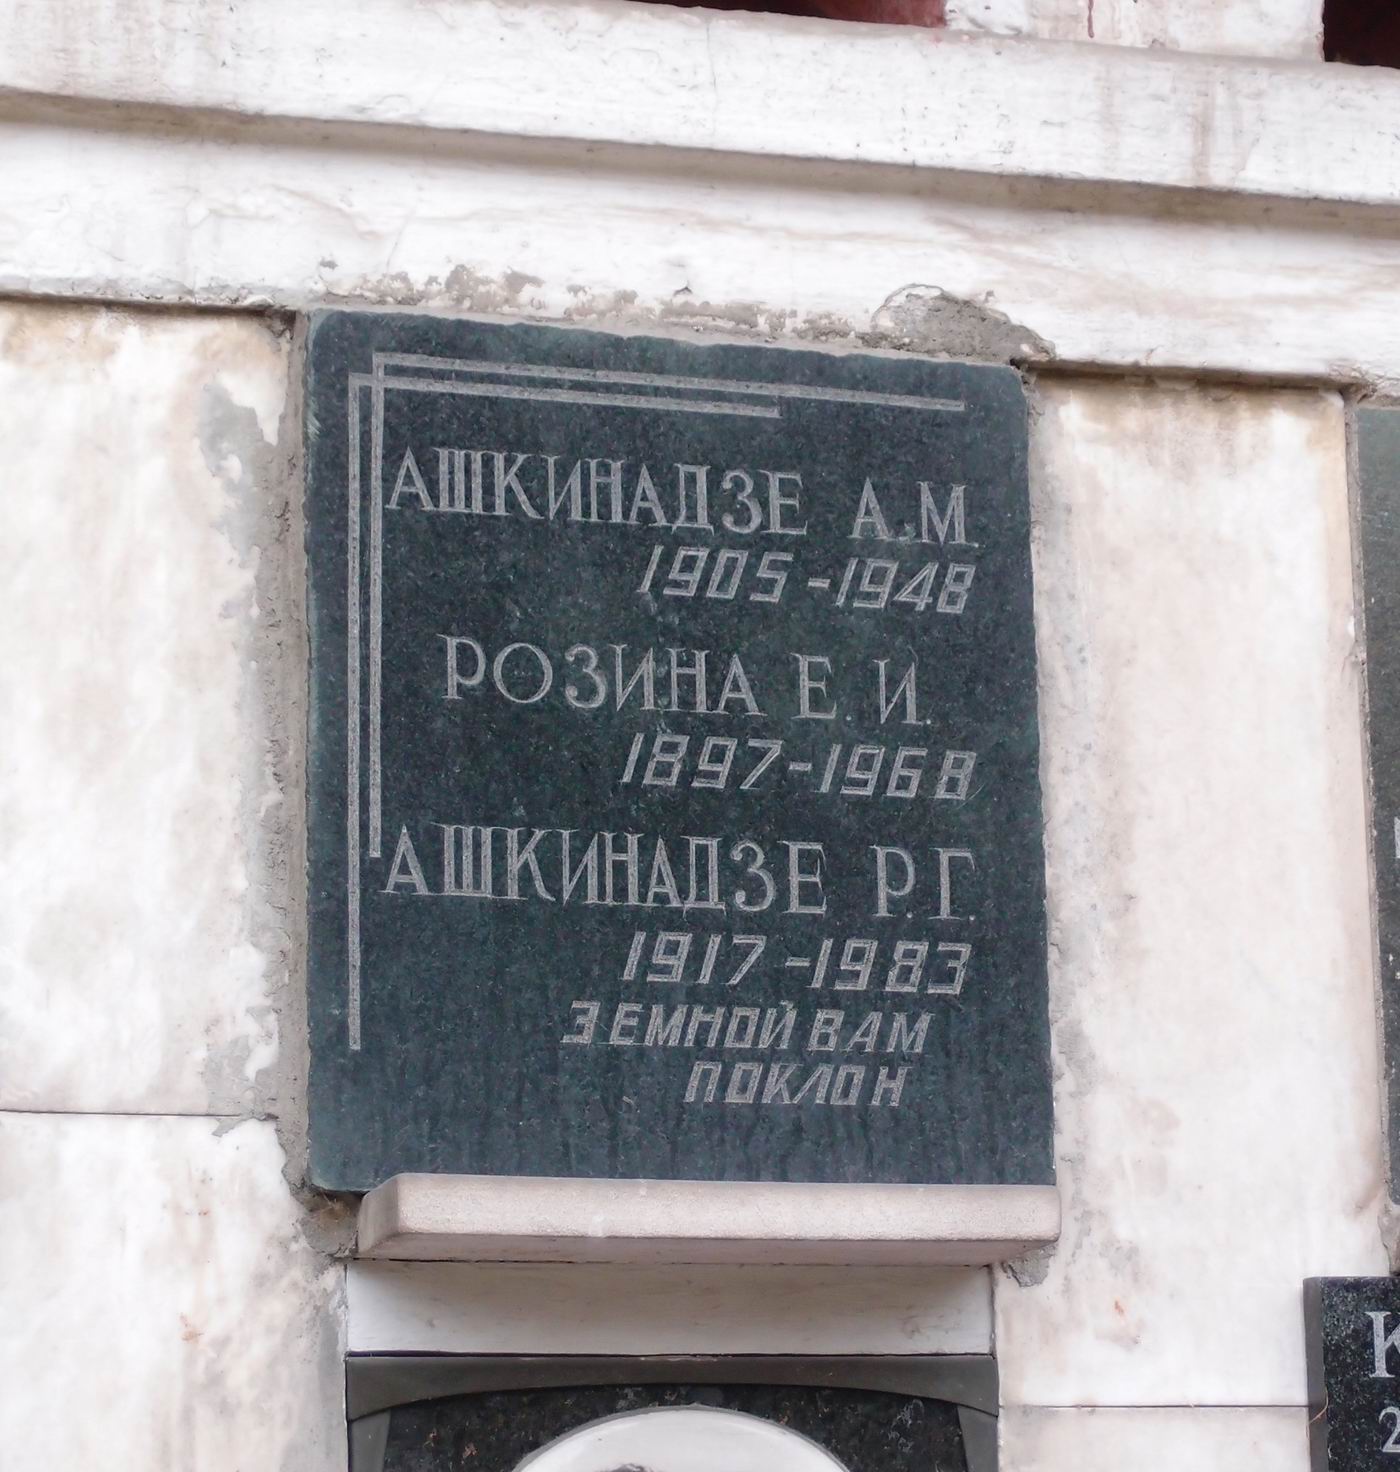 Плита на нише Ашкинадзе А.М. (1905-1948), на Новодевичьем кладбище (колумбарий [66]-4-1).